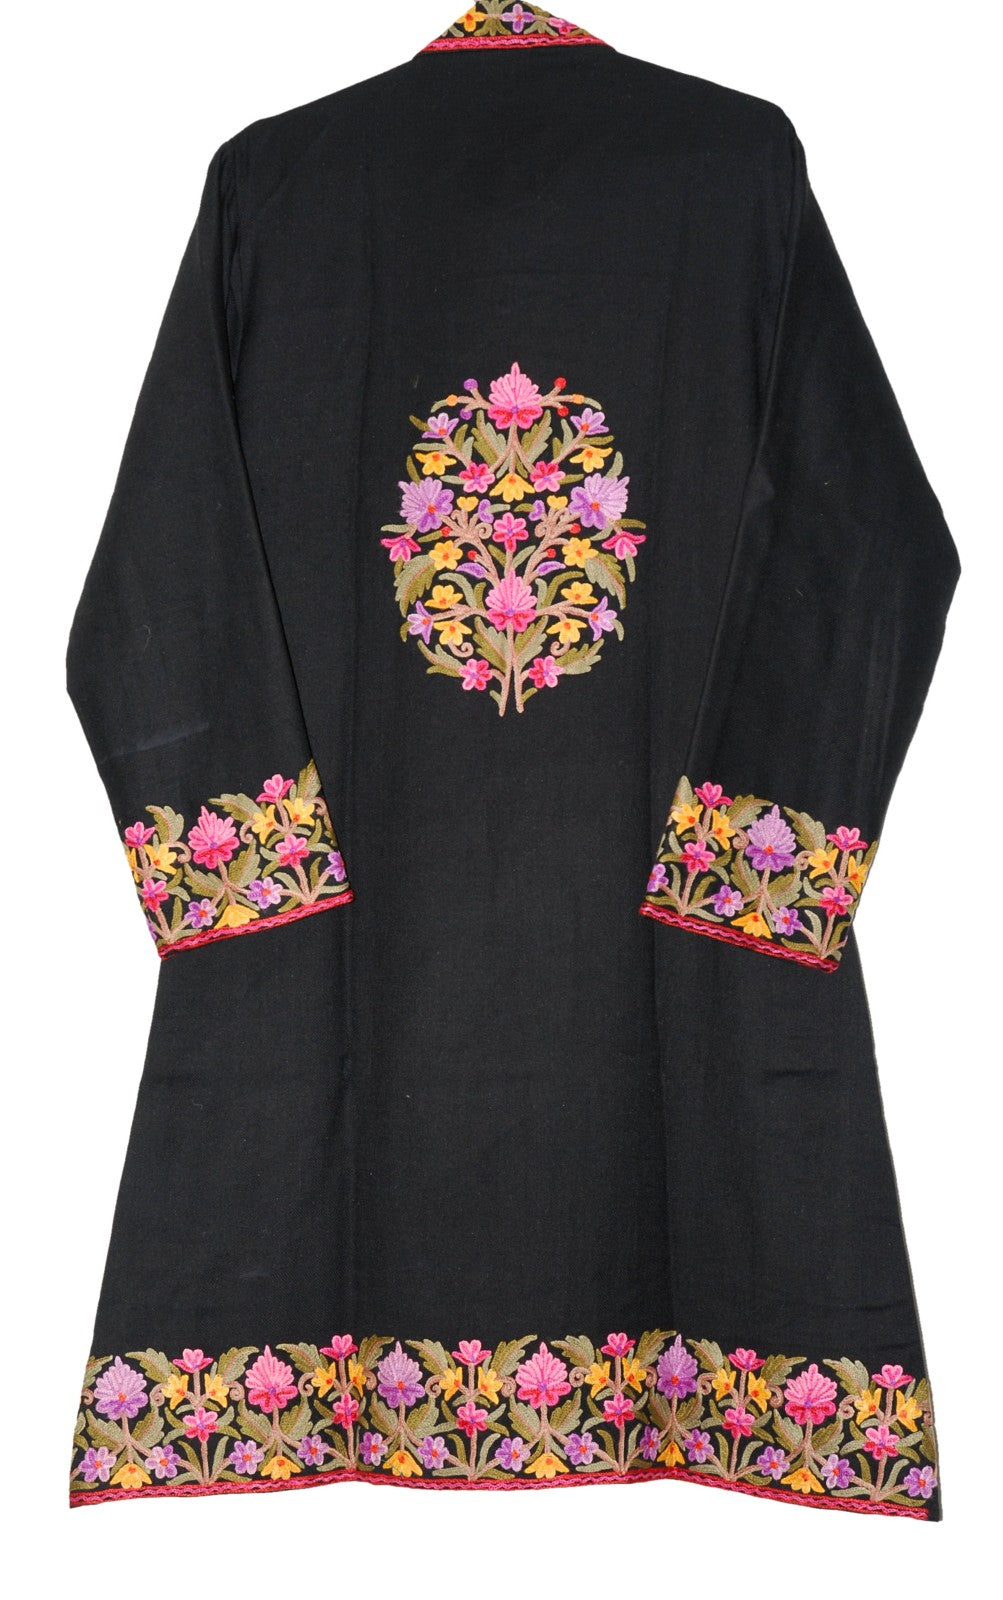 Woolen Coat Long Jacket Black, Multicolor Embroidery #BD-123